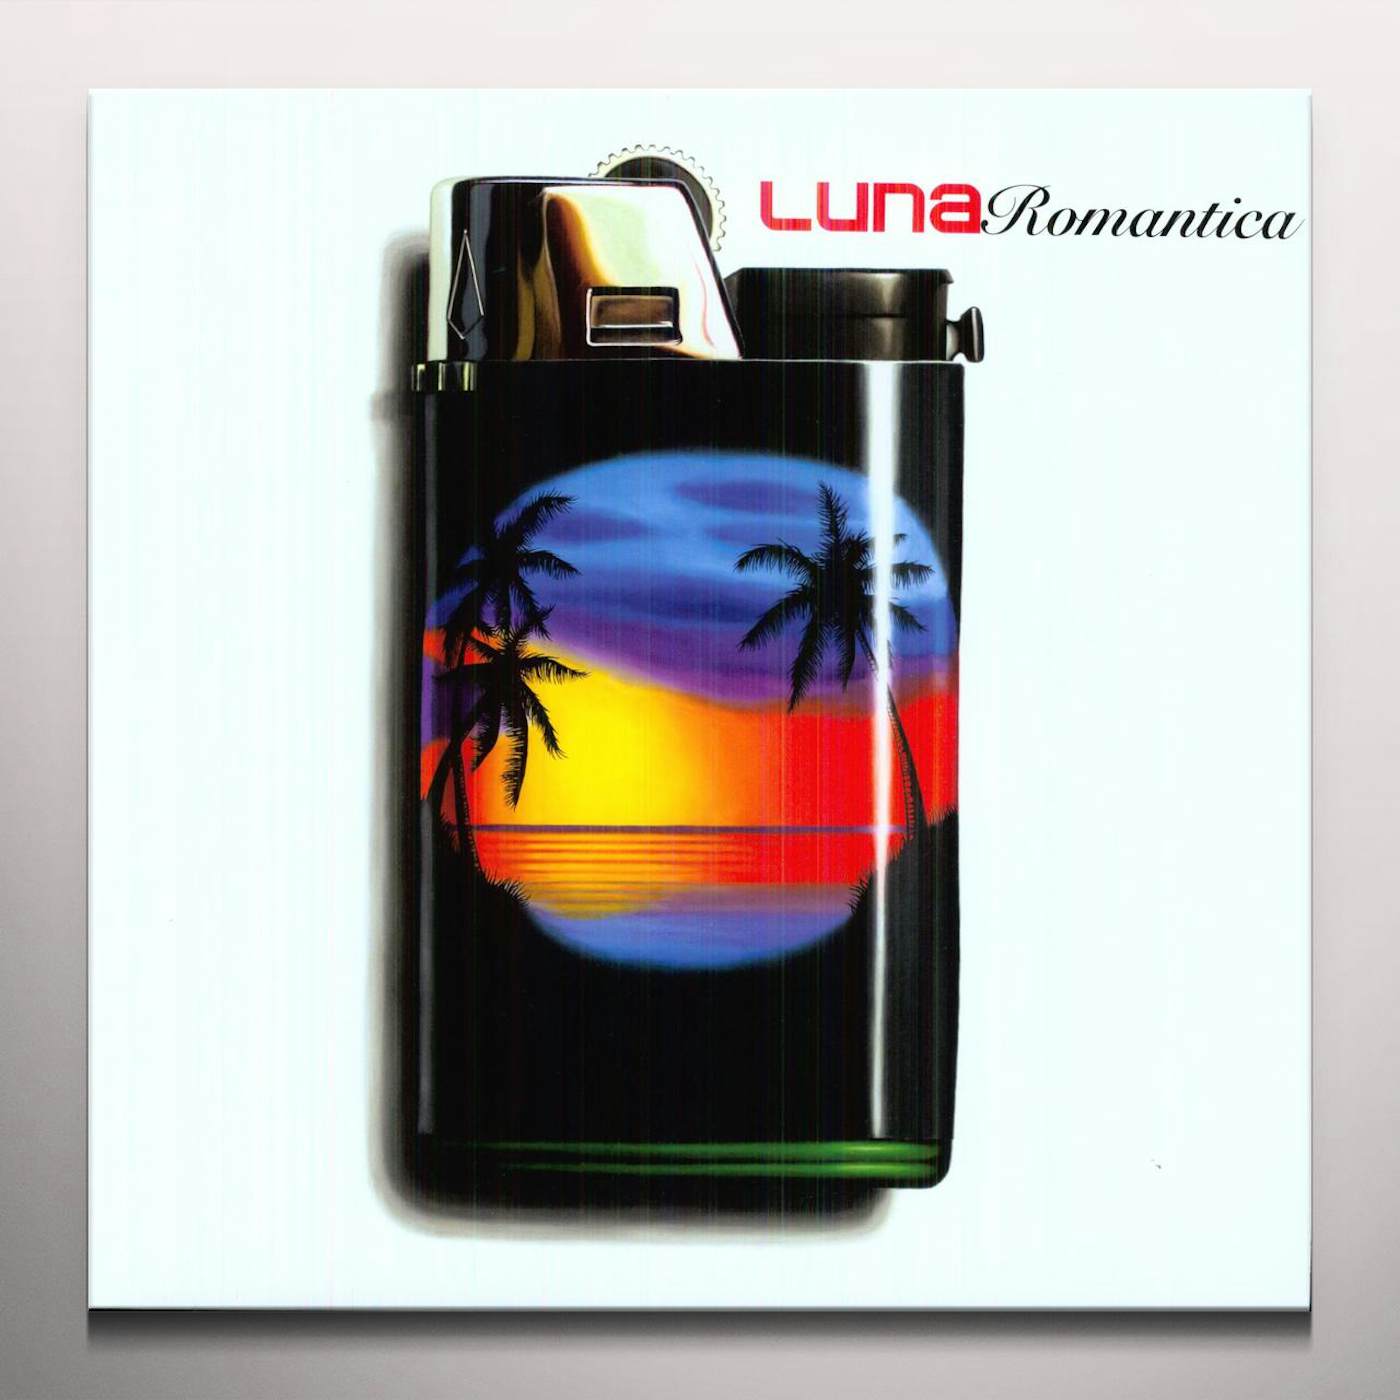 Luna Romantica Vinyl Record